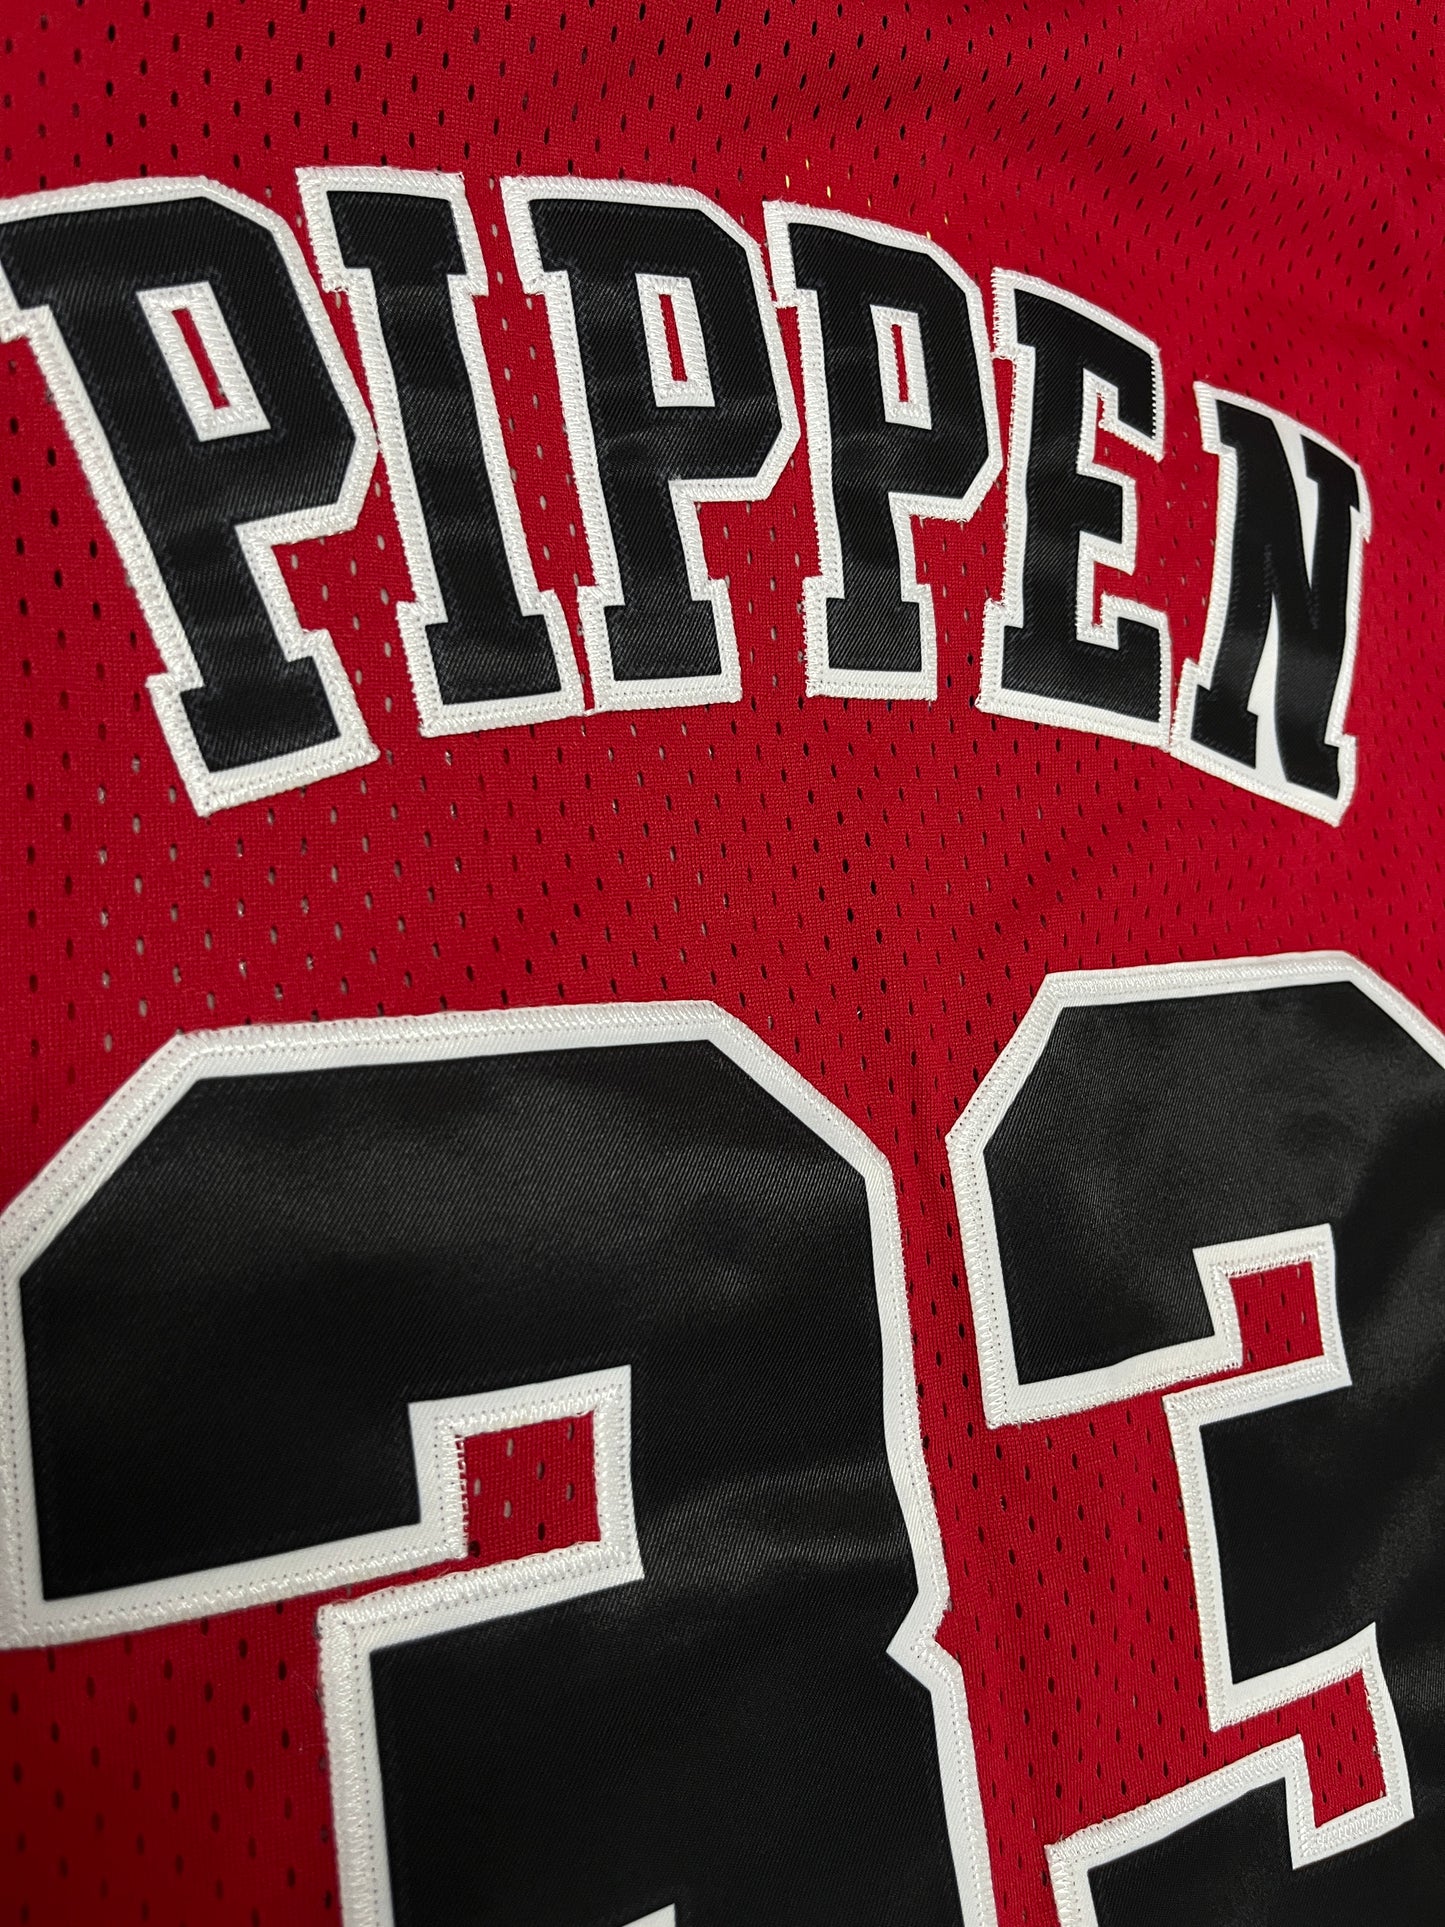 PIPPEN 33 Red Chicago Bulls NBA Jersey